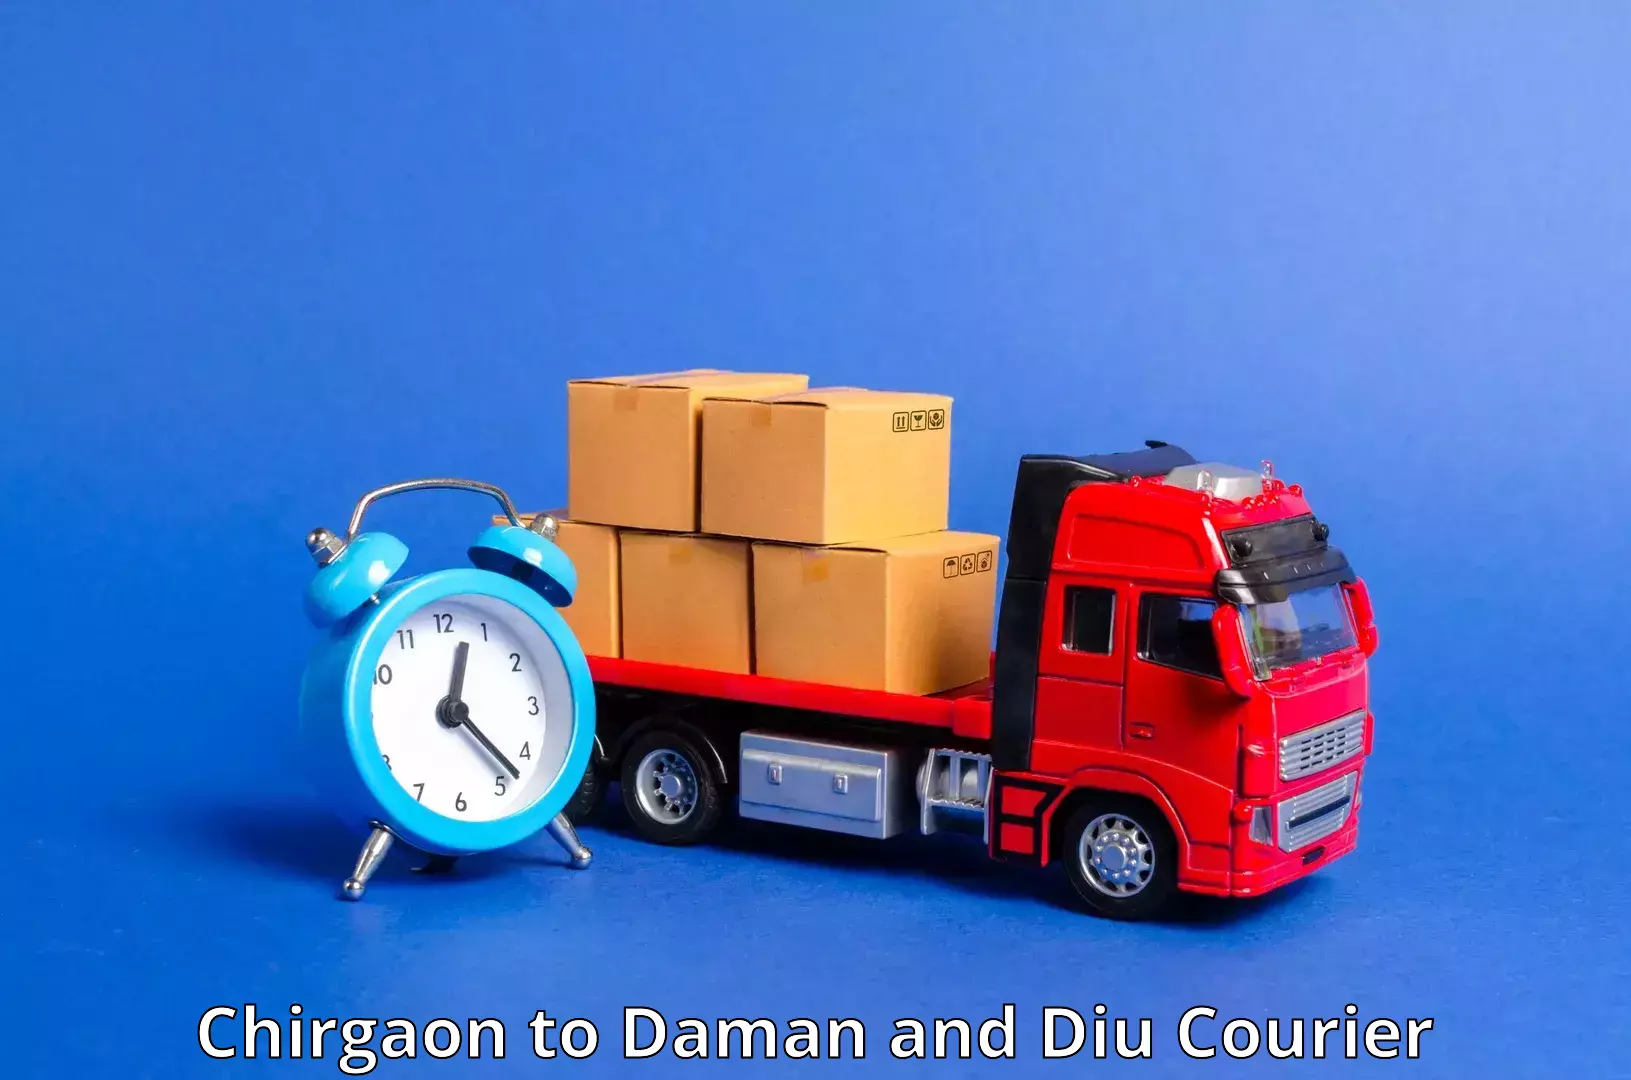 Express postal services Chirgaon to Daman and Diu